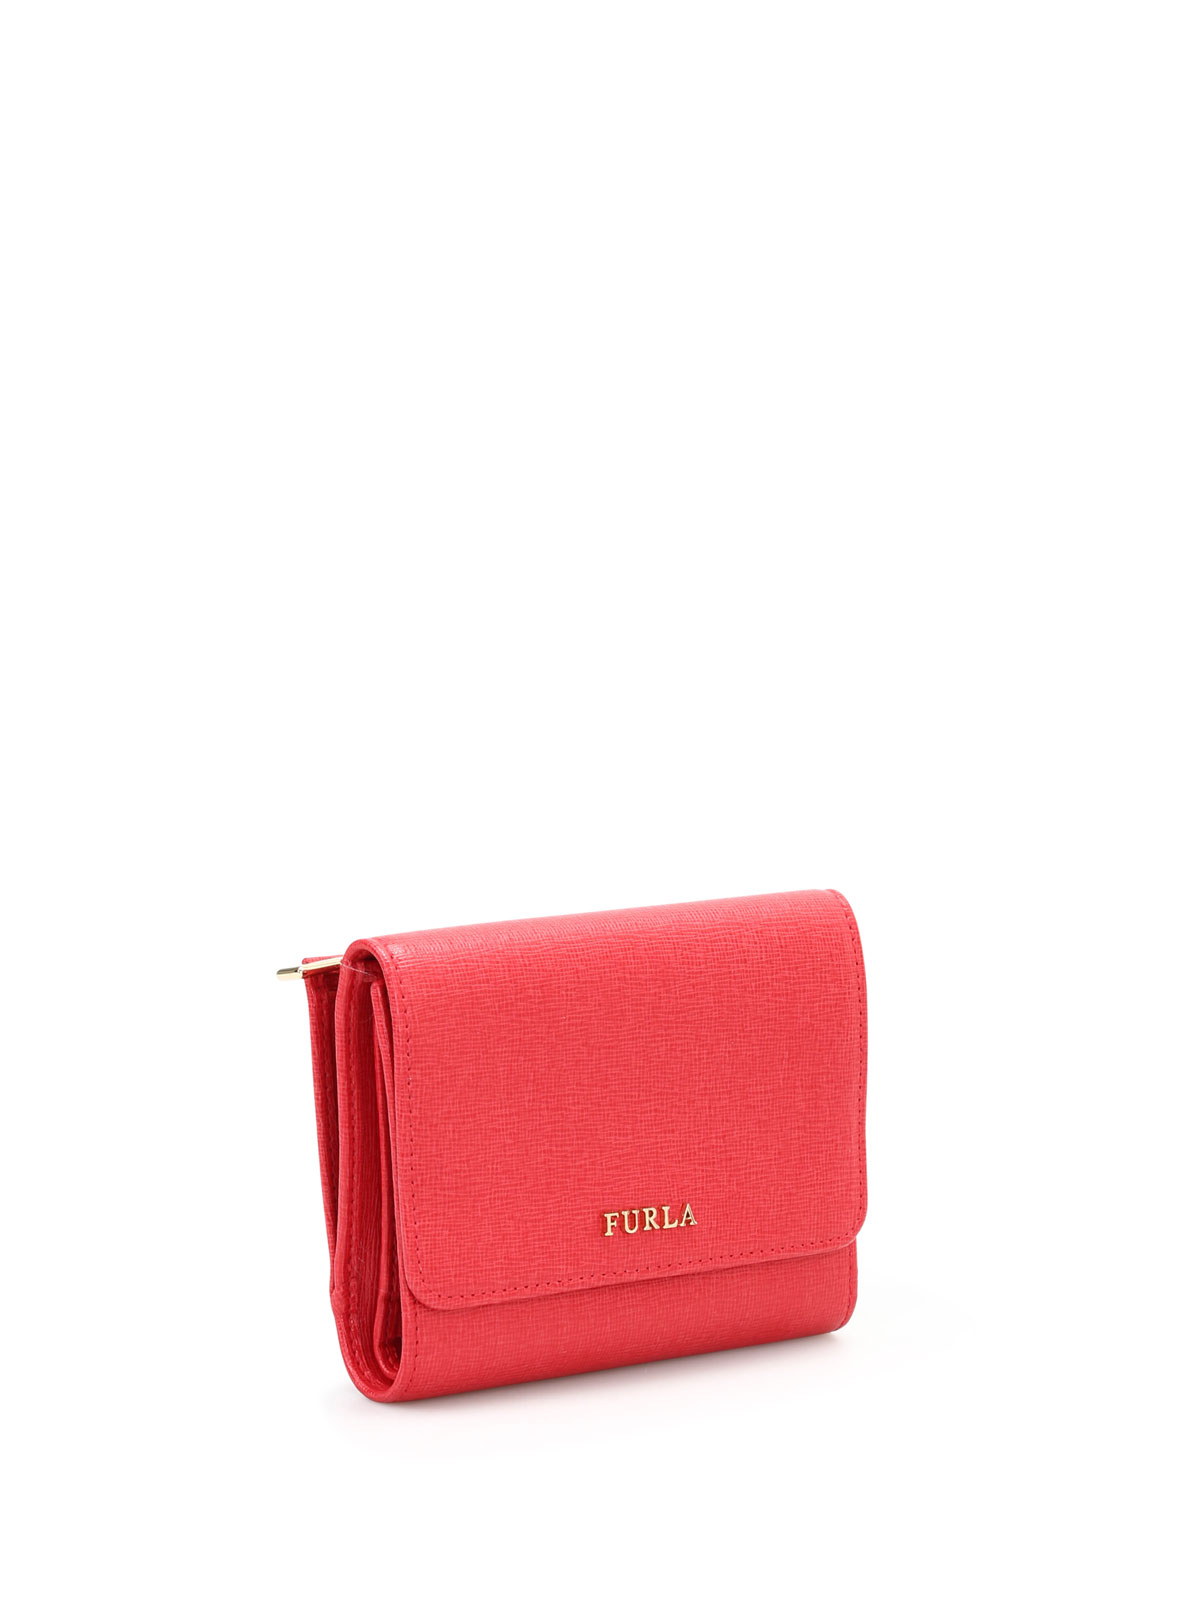 Wallets & purses Furla - Babylon wallet M - 827985 | Shop at iKRIX